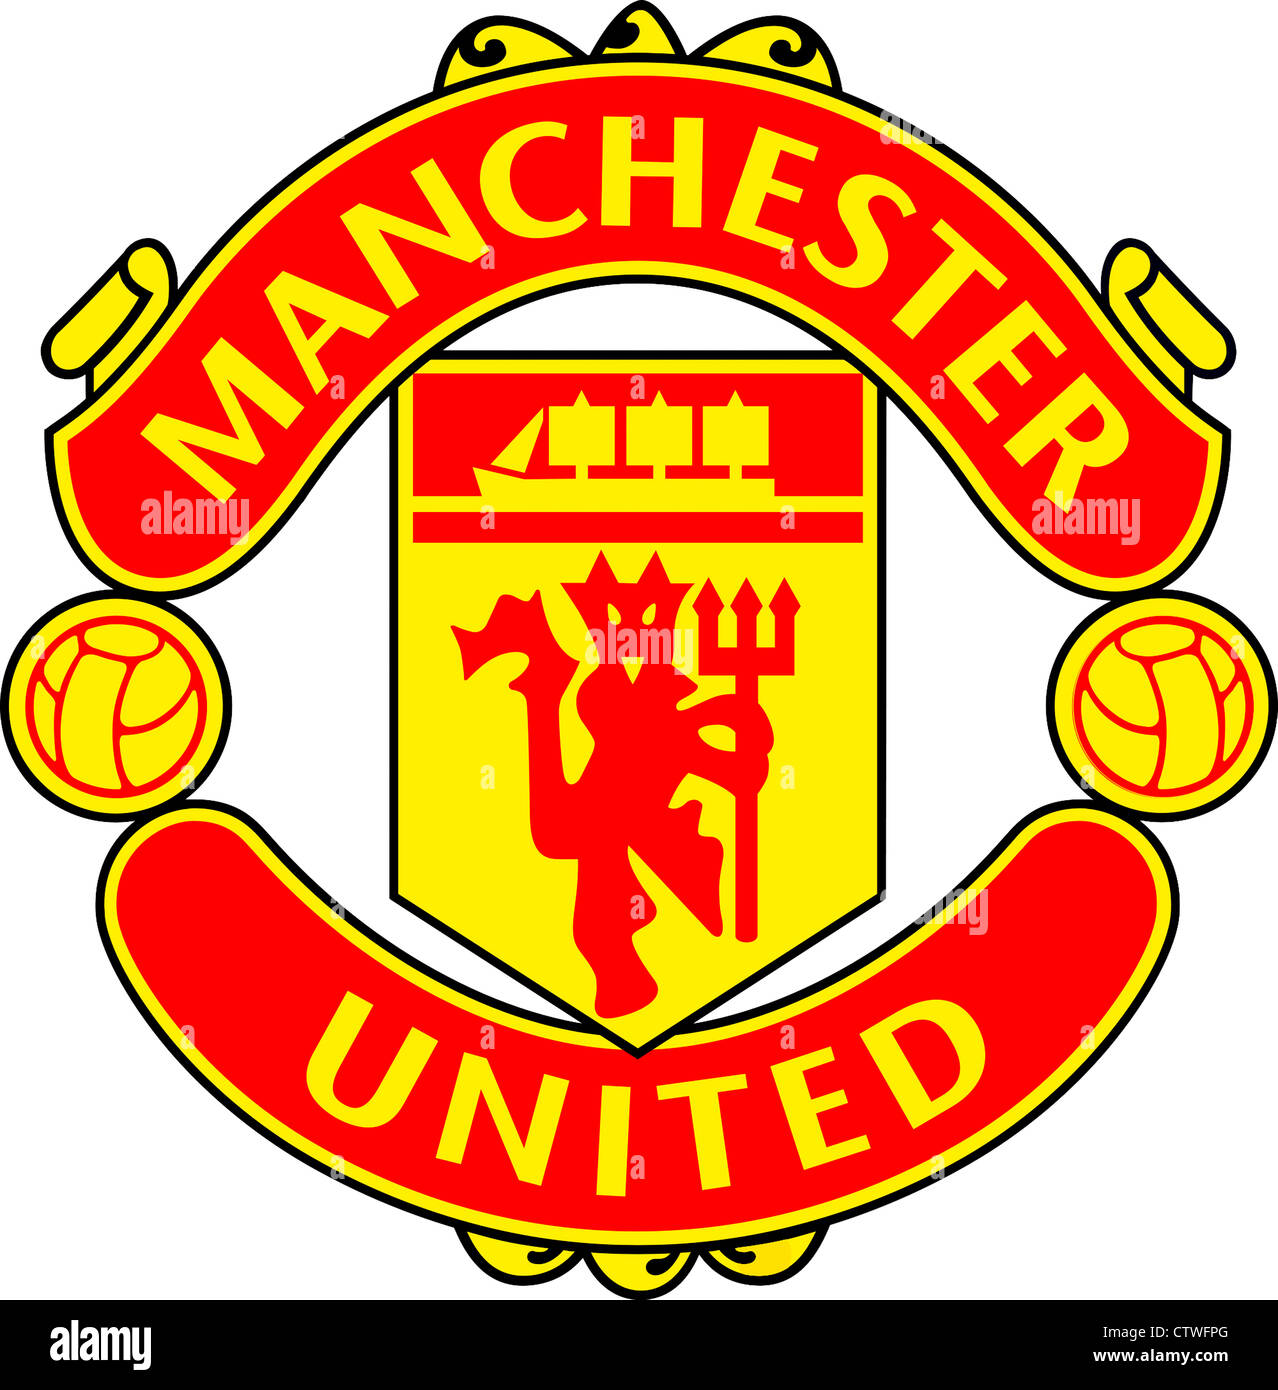 Logo of English football team Manchester United. Stock Photo